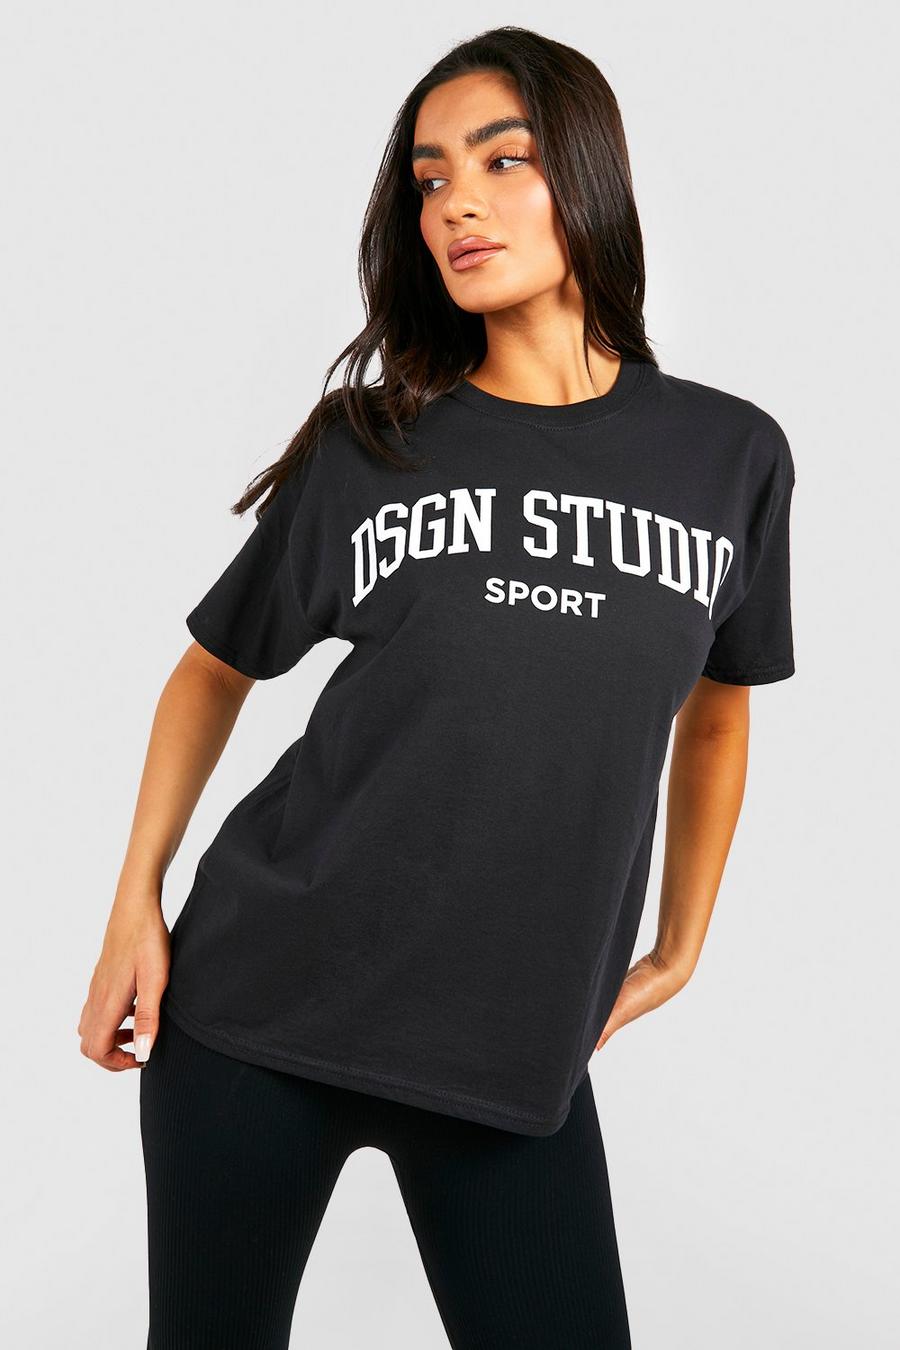 Black Oversized Dsgn Studio Sport T-Shirt Met Tekst image number 1